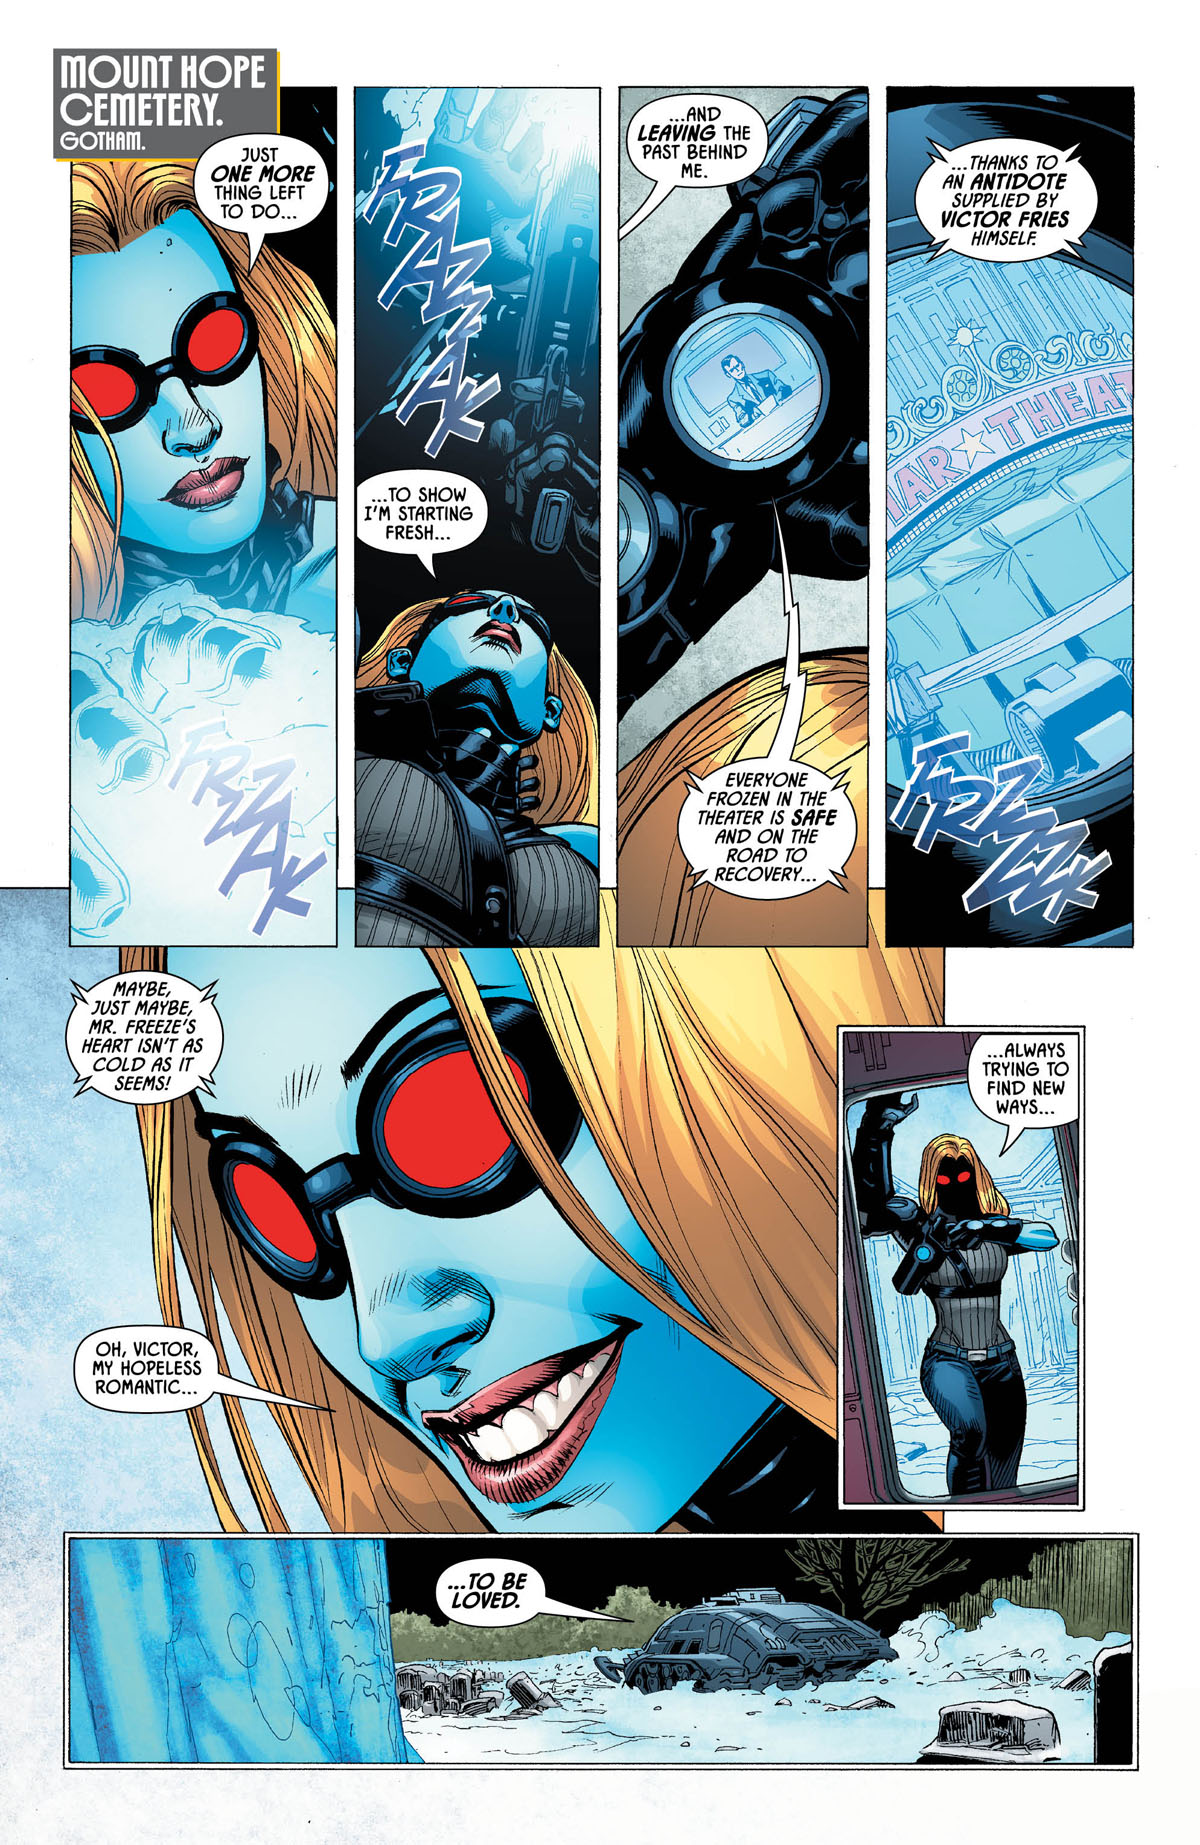 Detective Comics #1016 page 1